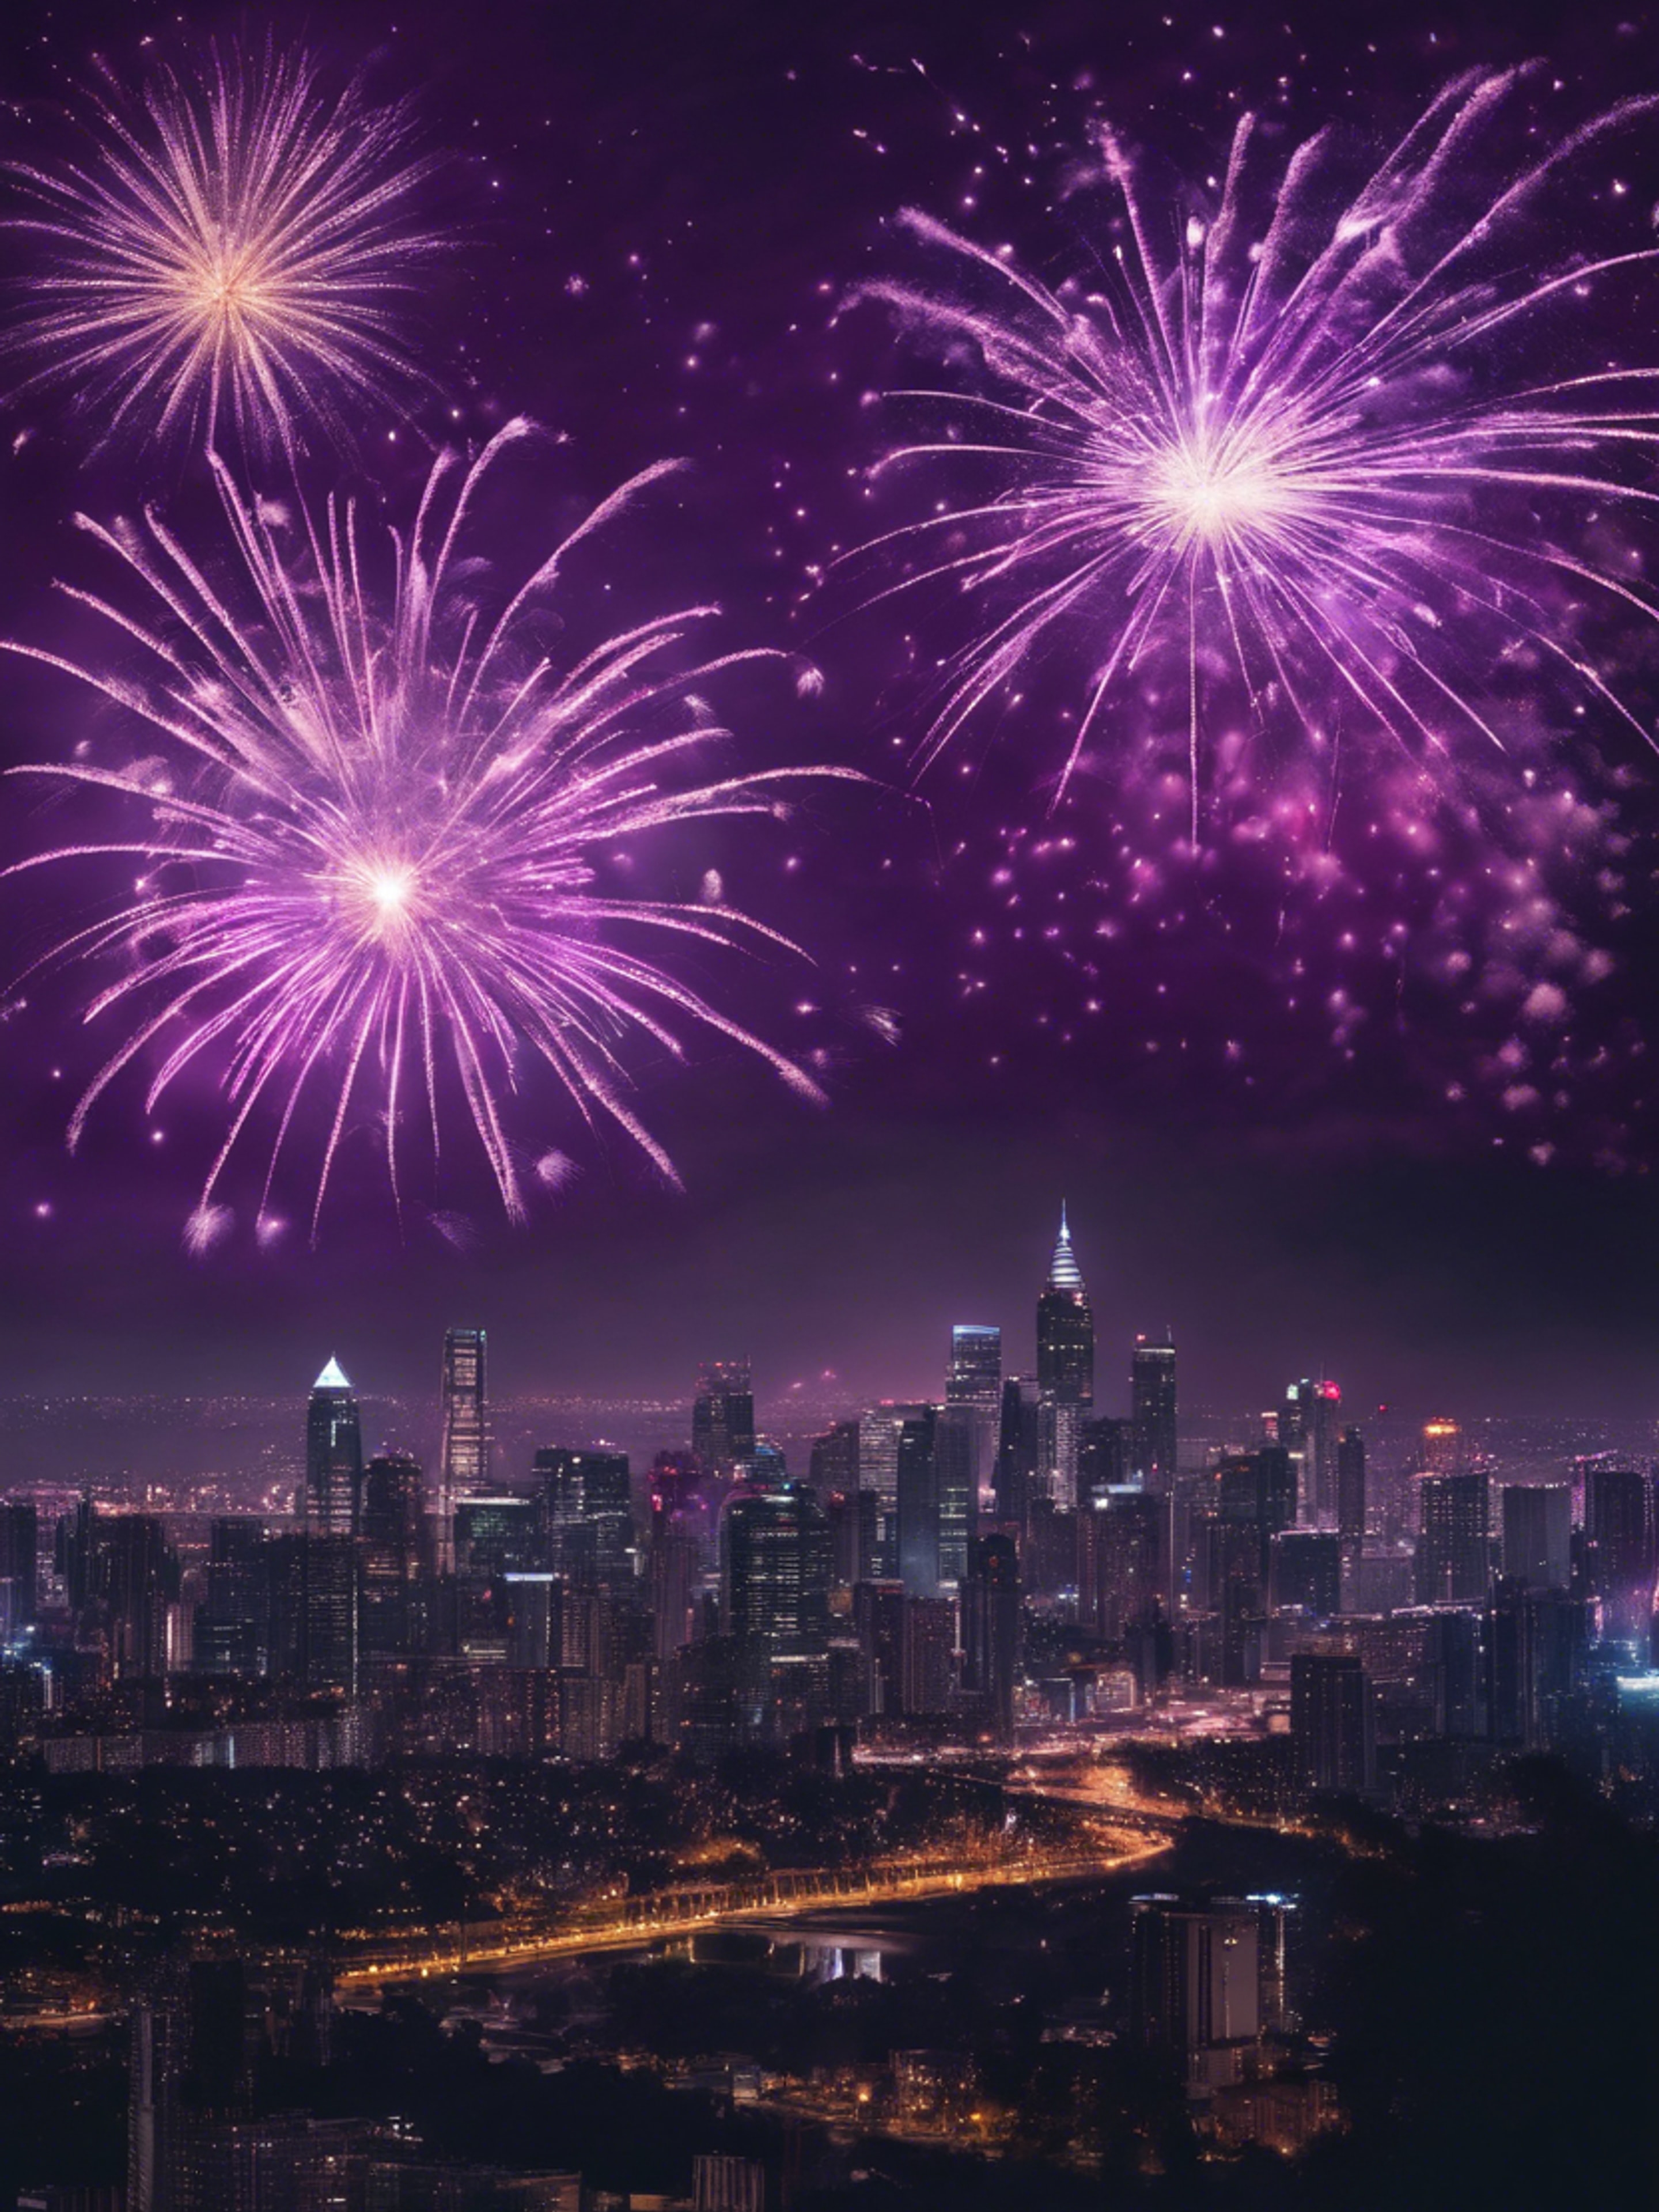 Dark purple fireworks illuminating the night's sky over an illuminated city skyline. Tapéta[a2398988017f44d3a04c]